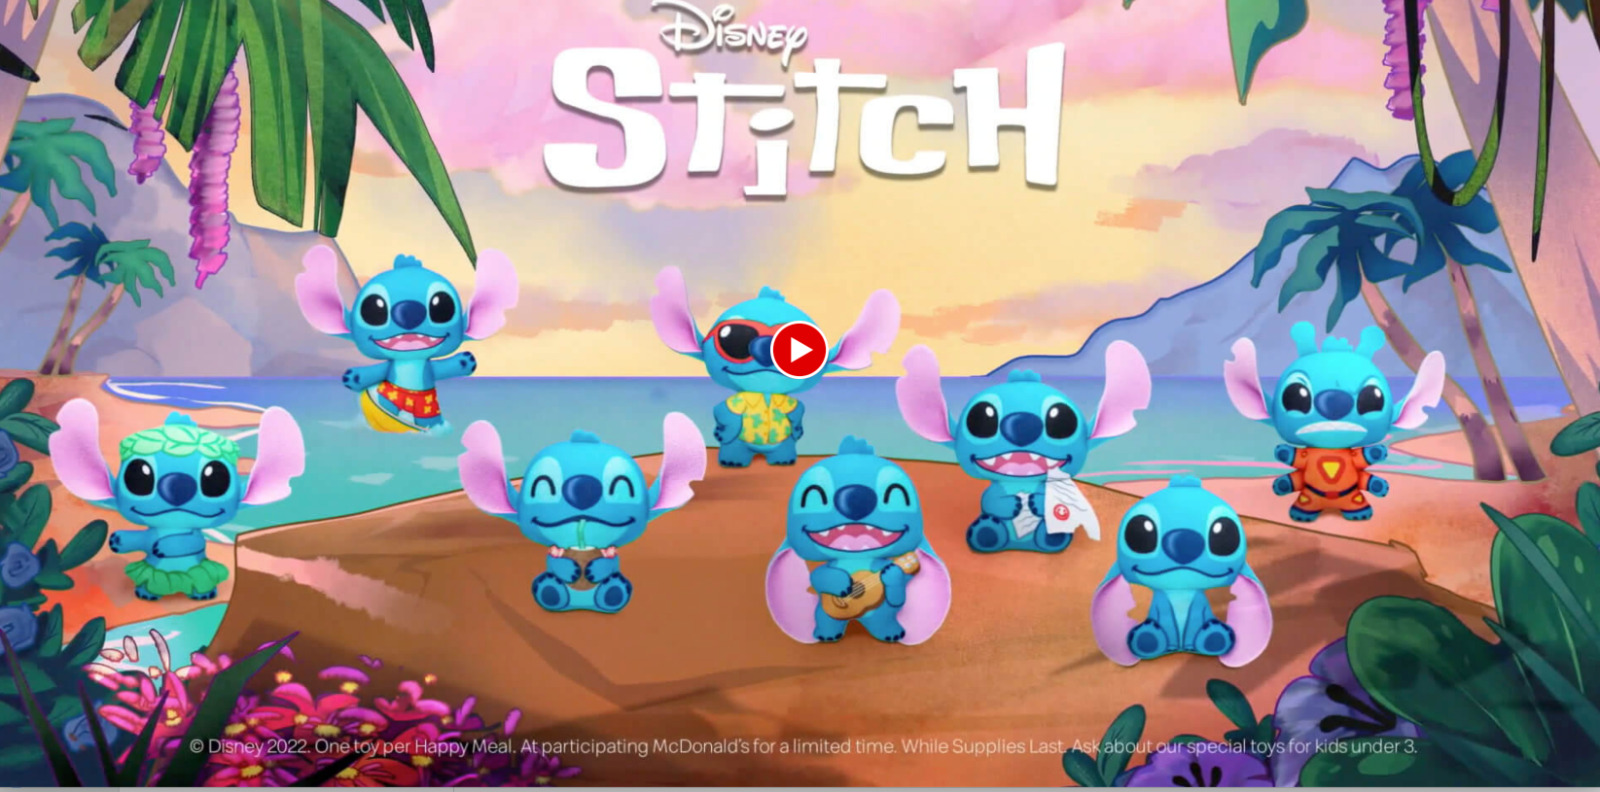 2022 McDONALD'S Stitch Disney's HAPPY MEAL TOYS Or Set